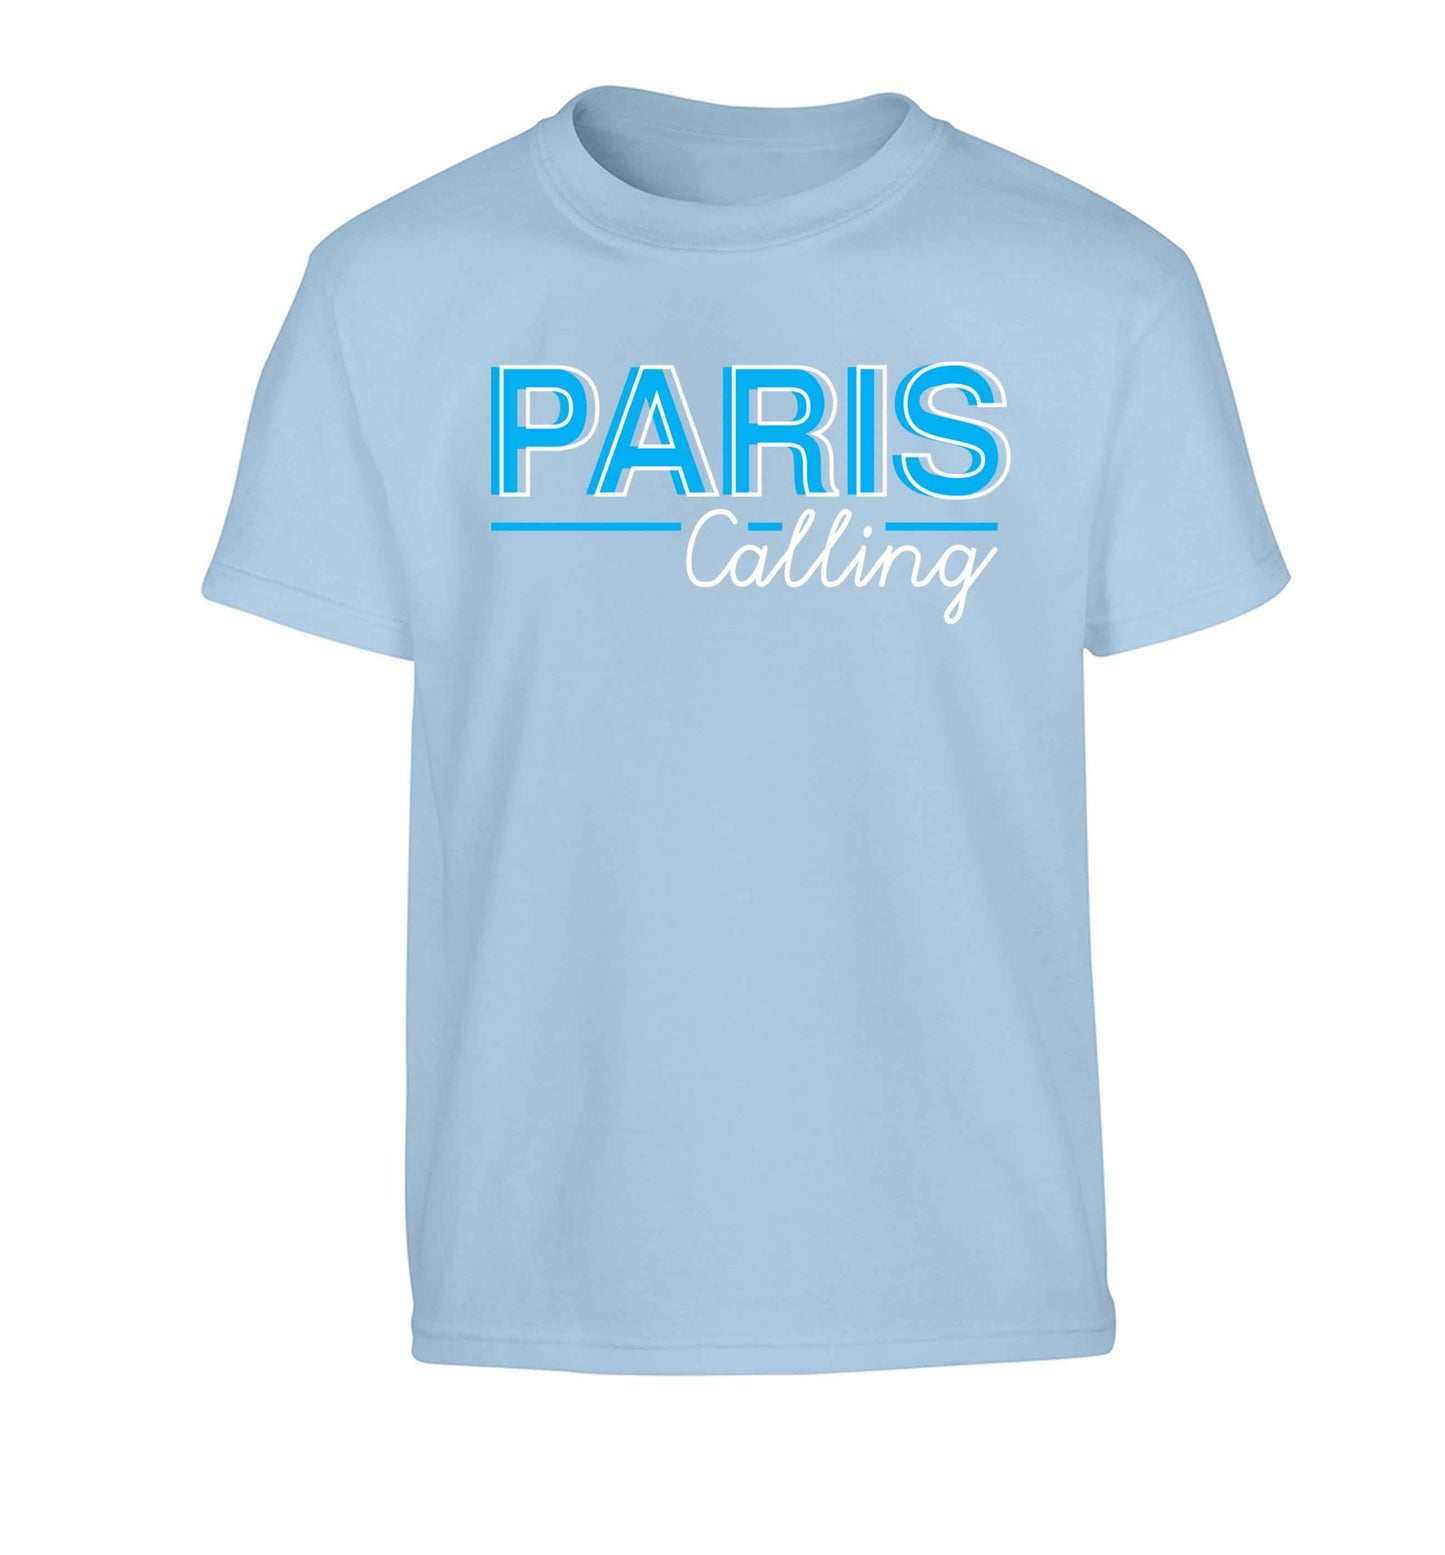 Paris calling Children's light blue Tshirt 12-13 Years